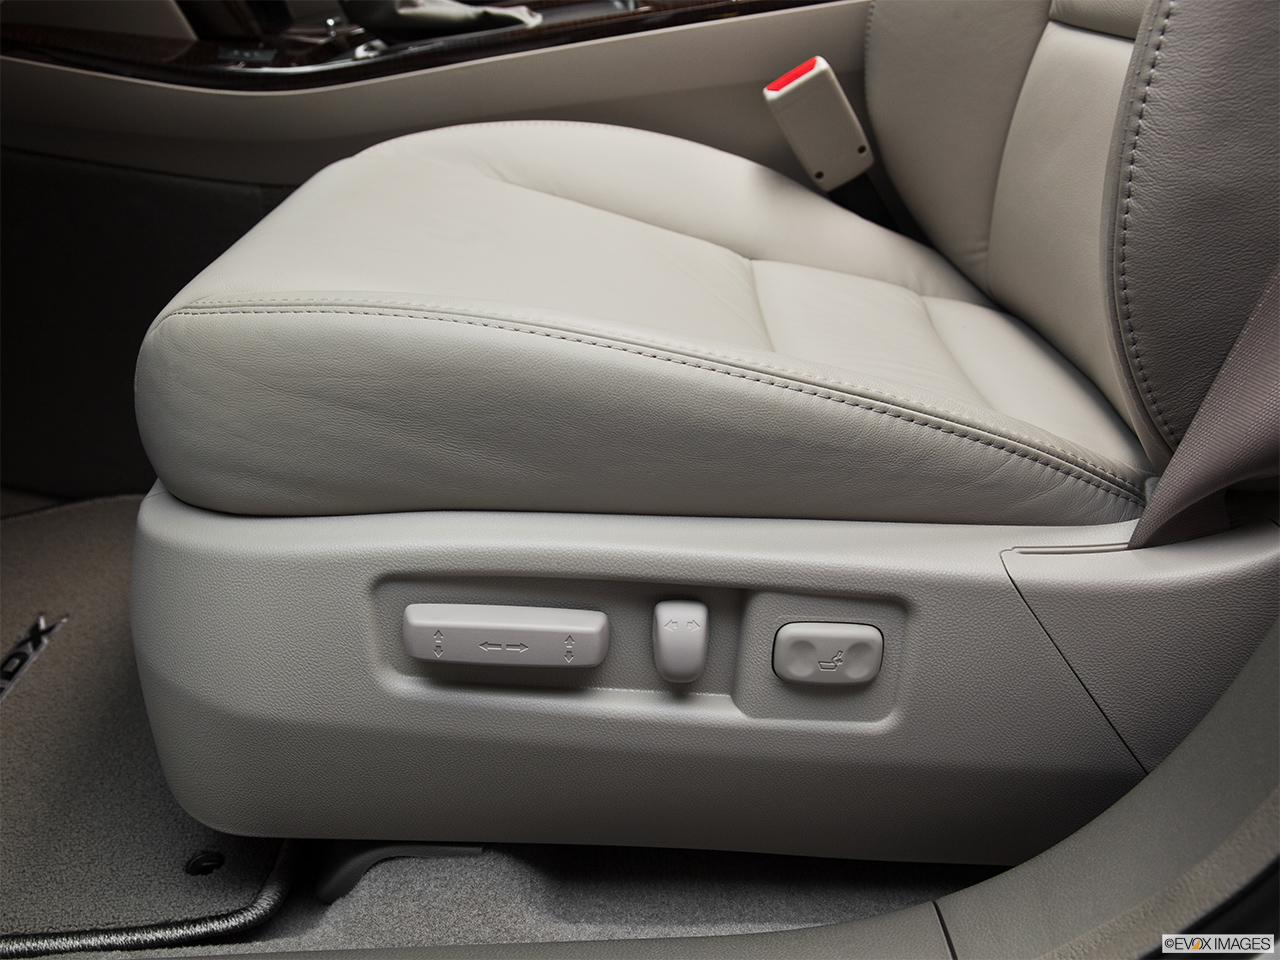 2011 Acura MDX MDX Seat Adjustment Controllers. 